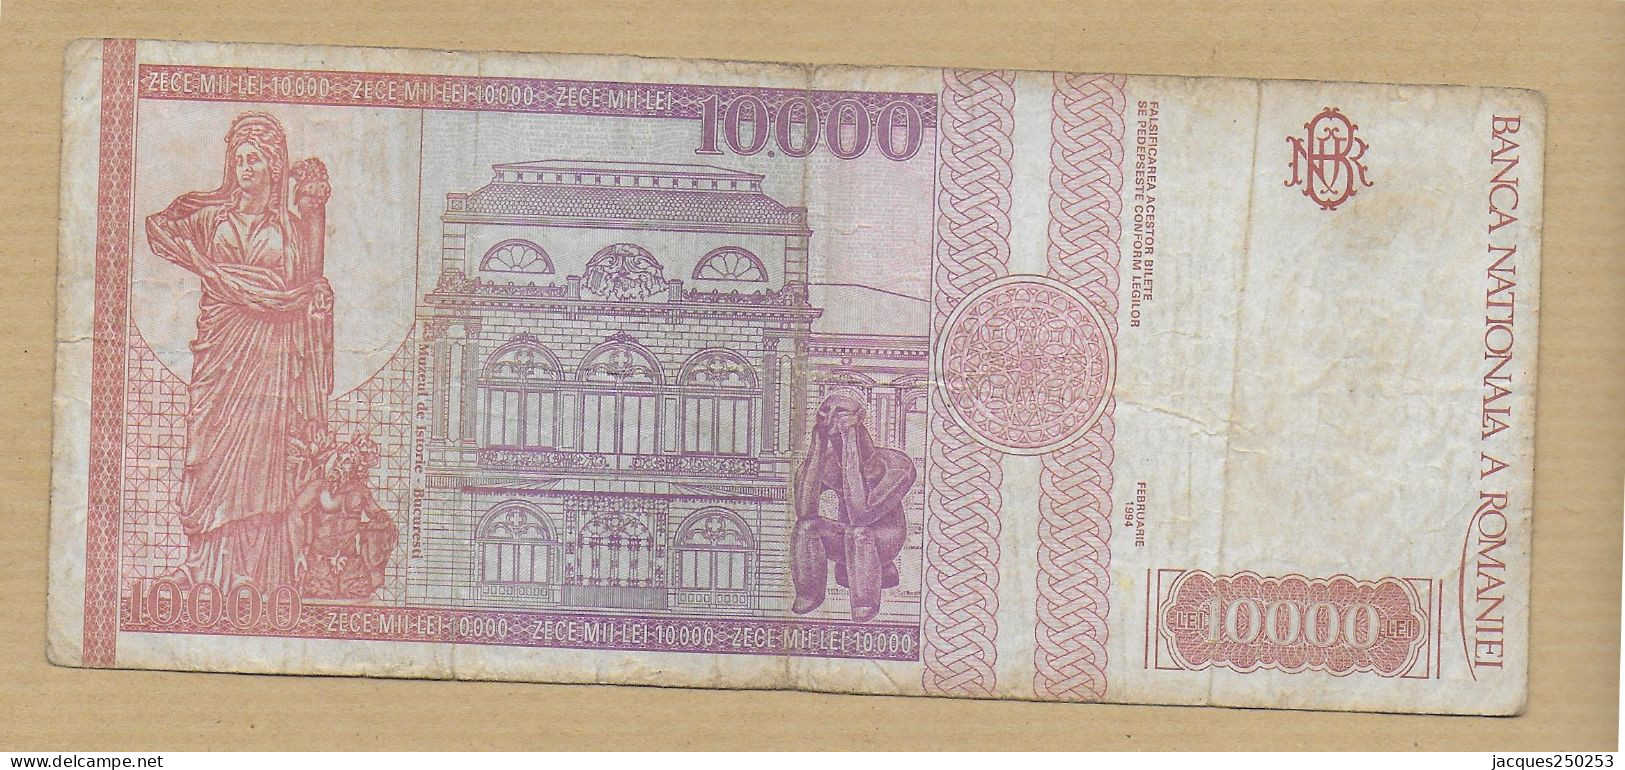 10000 LEI 1994 - Romania